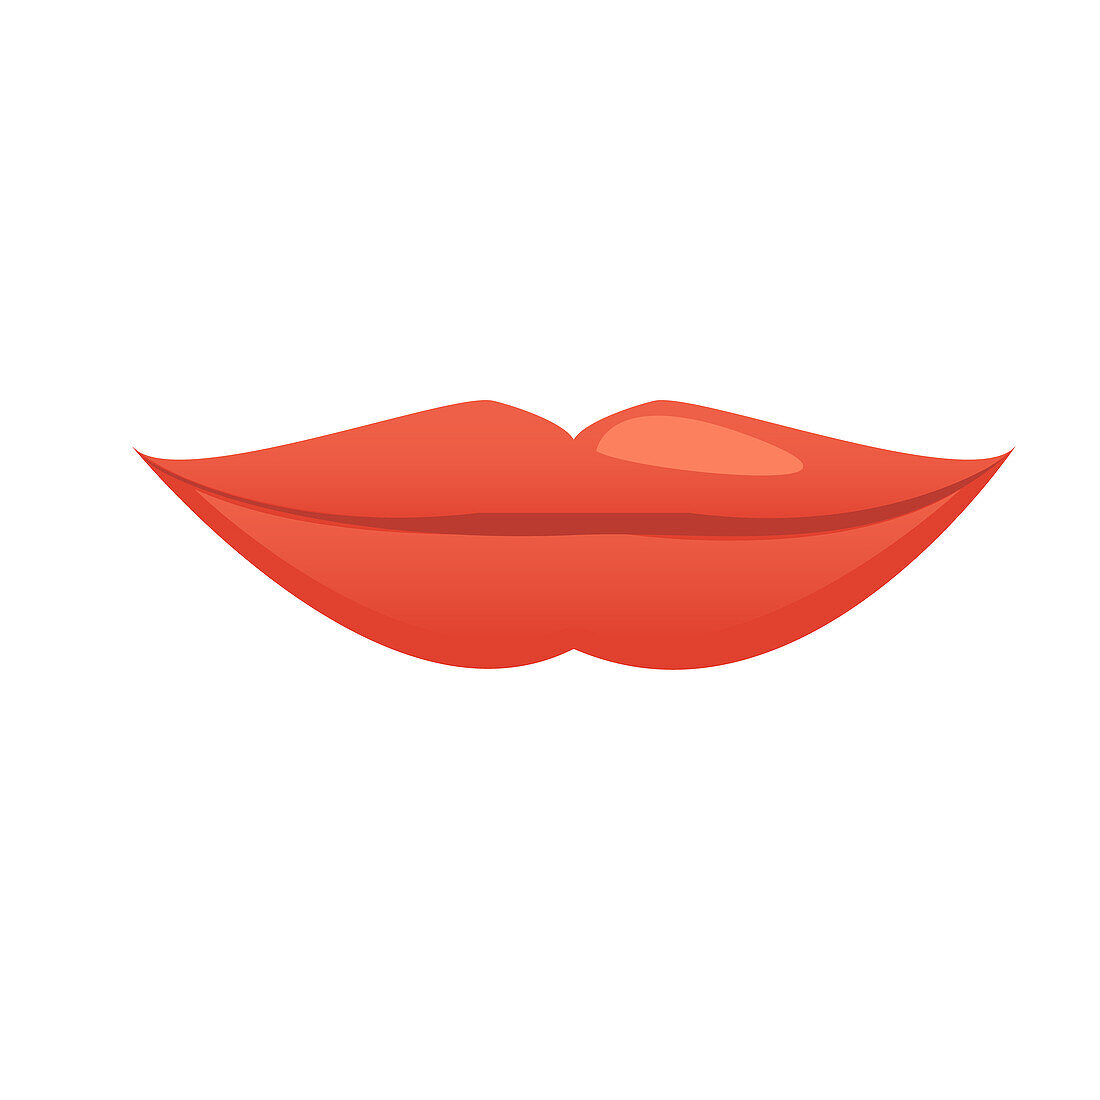 Lips, illustration